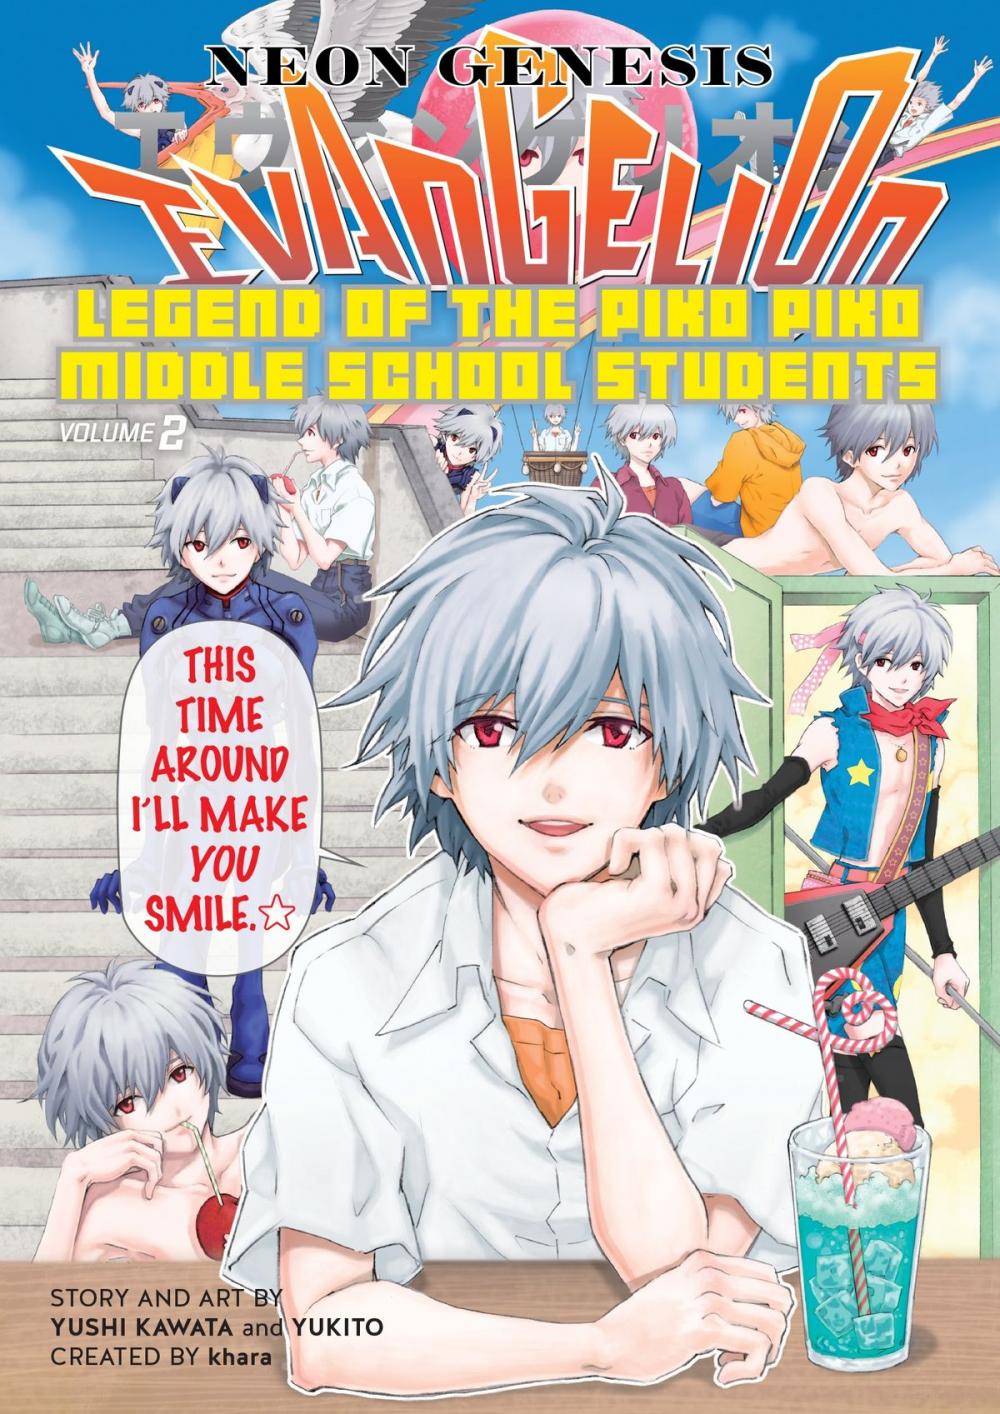 Big bigCover of Neon Genesis Evangelion: The Legend of Piko Piko Middle School Students Volume 2